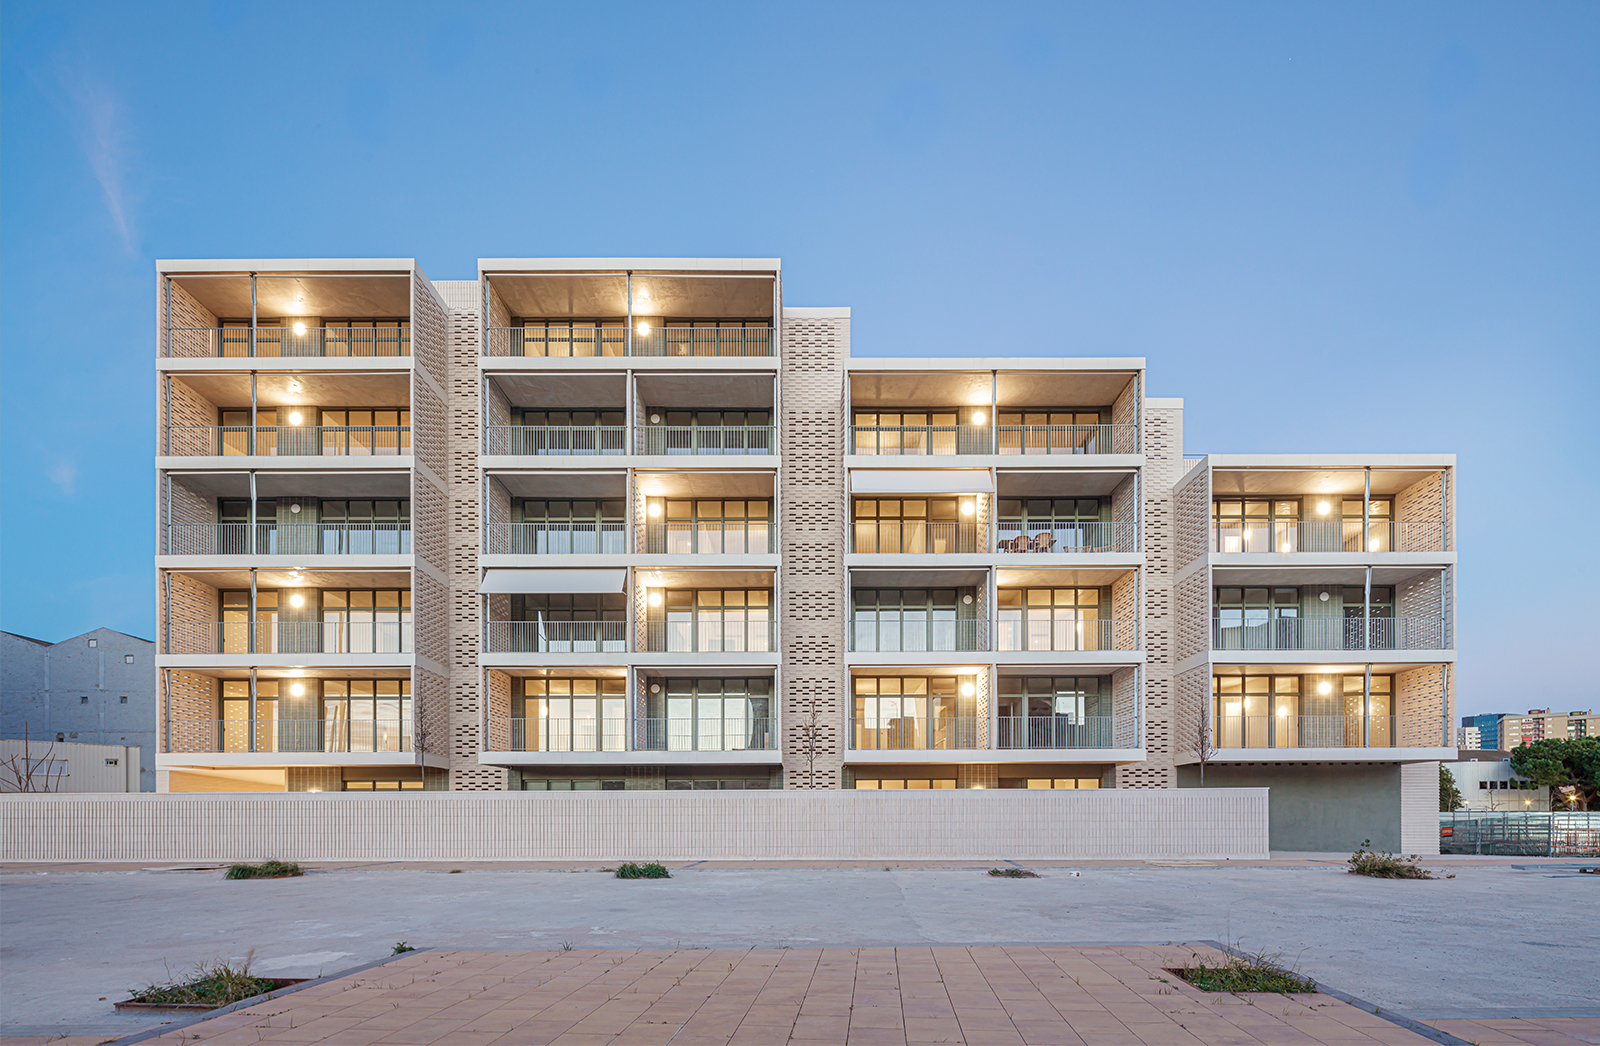 Archisearch L’Hospitalet Housing in L’Hospitalet de Llobregat | b720 - Fermín Vázquez Arquitectos